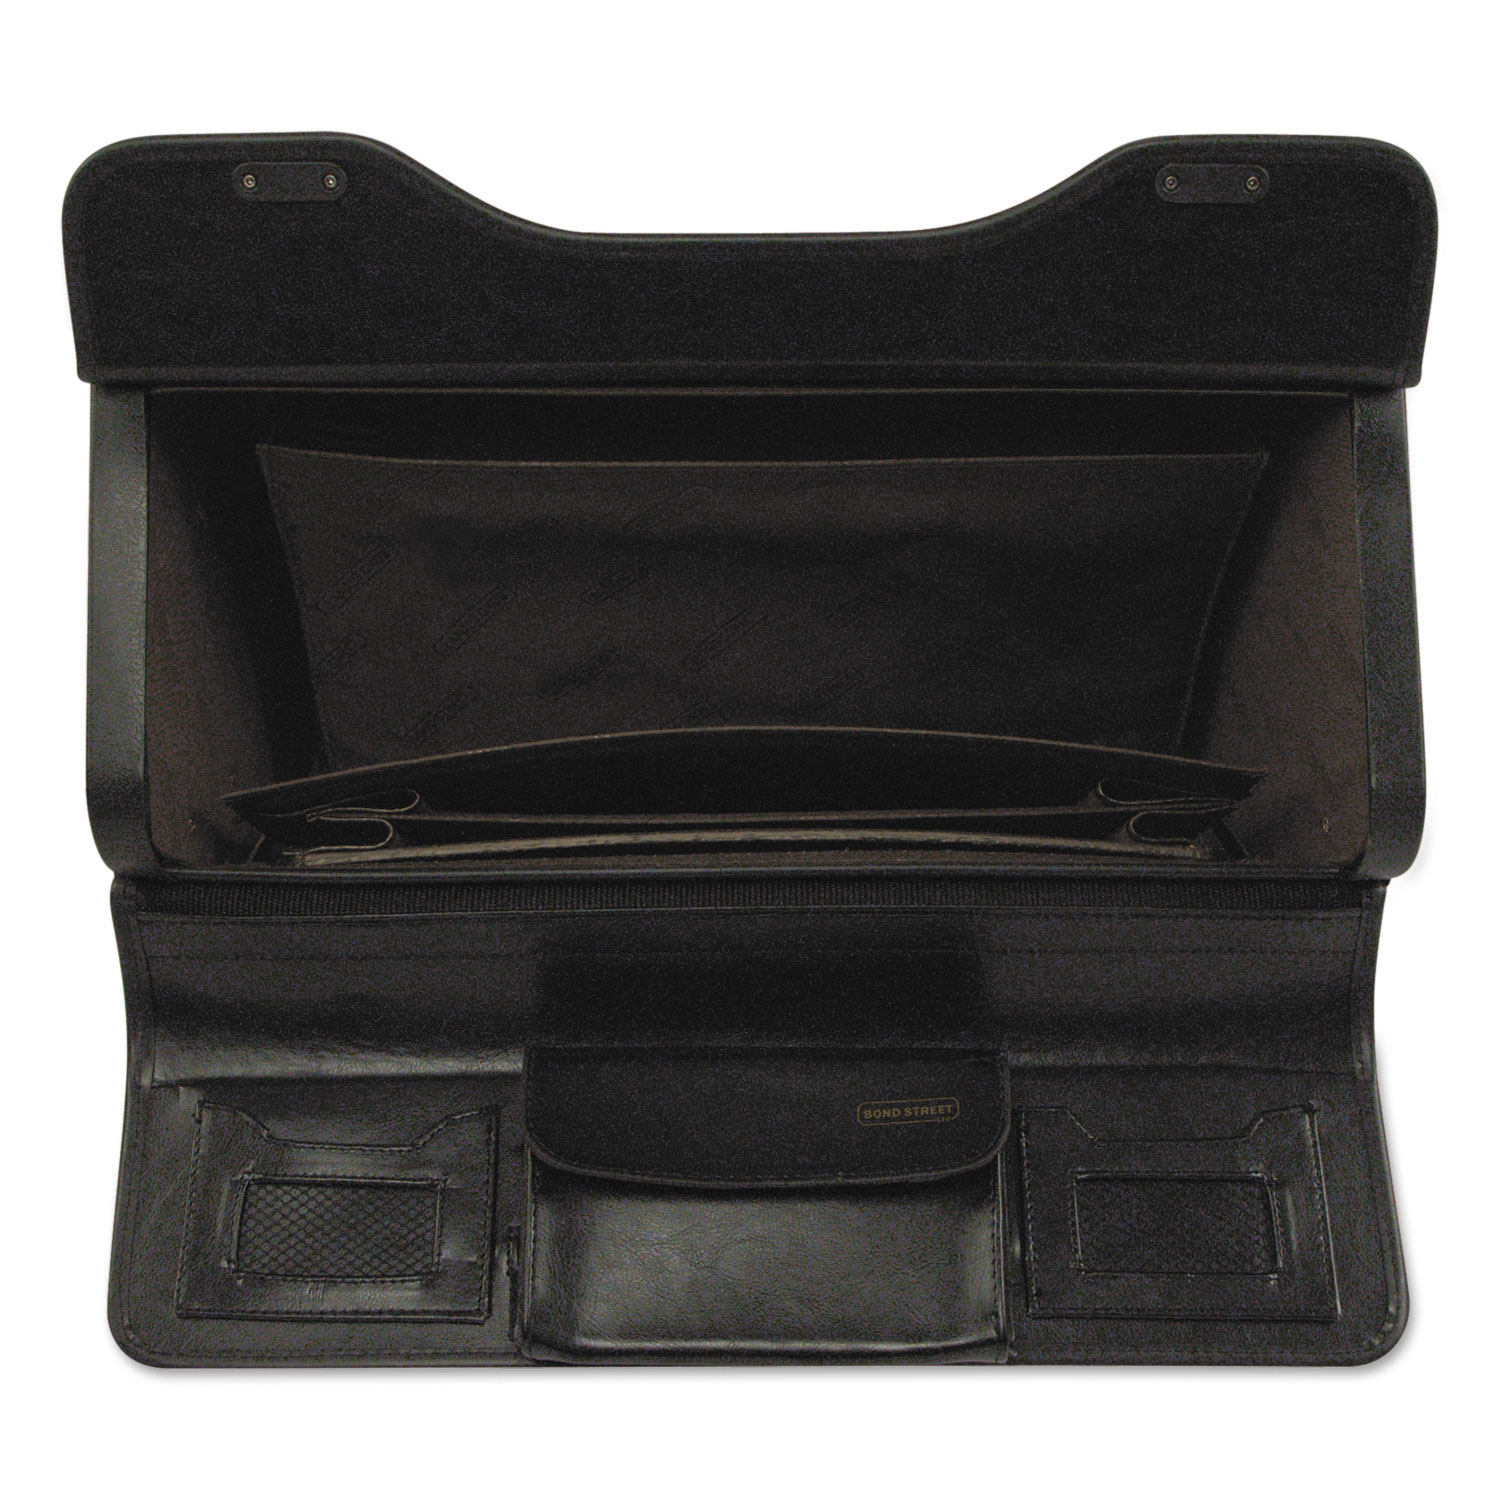 Bond Street Collection Catalog Case on Wheels, Leather, 19 x 9 x 15-1/2, Black